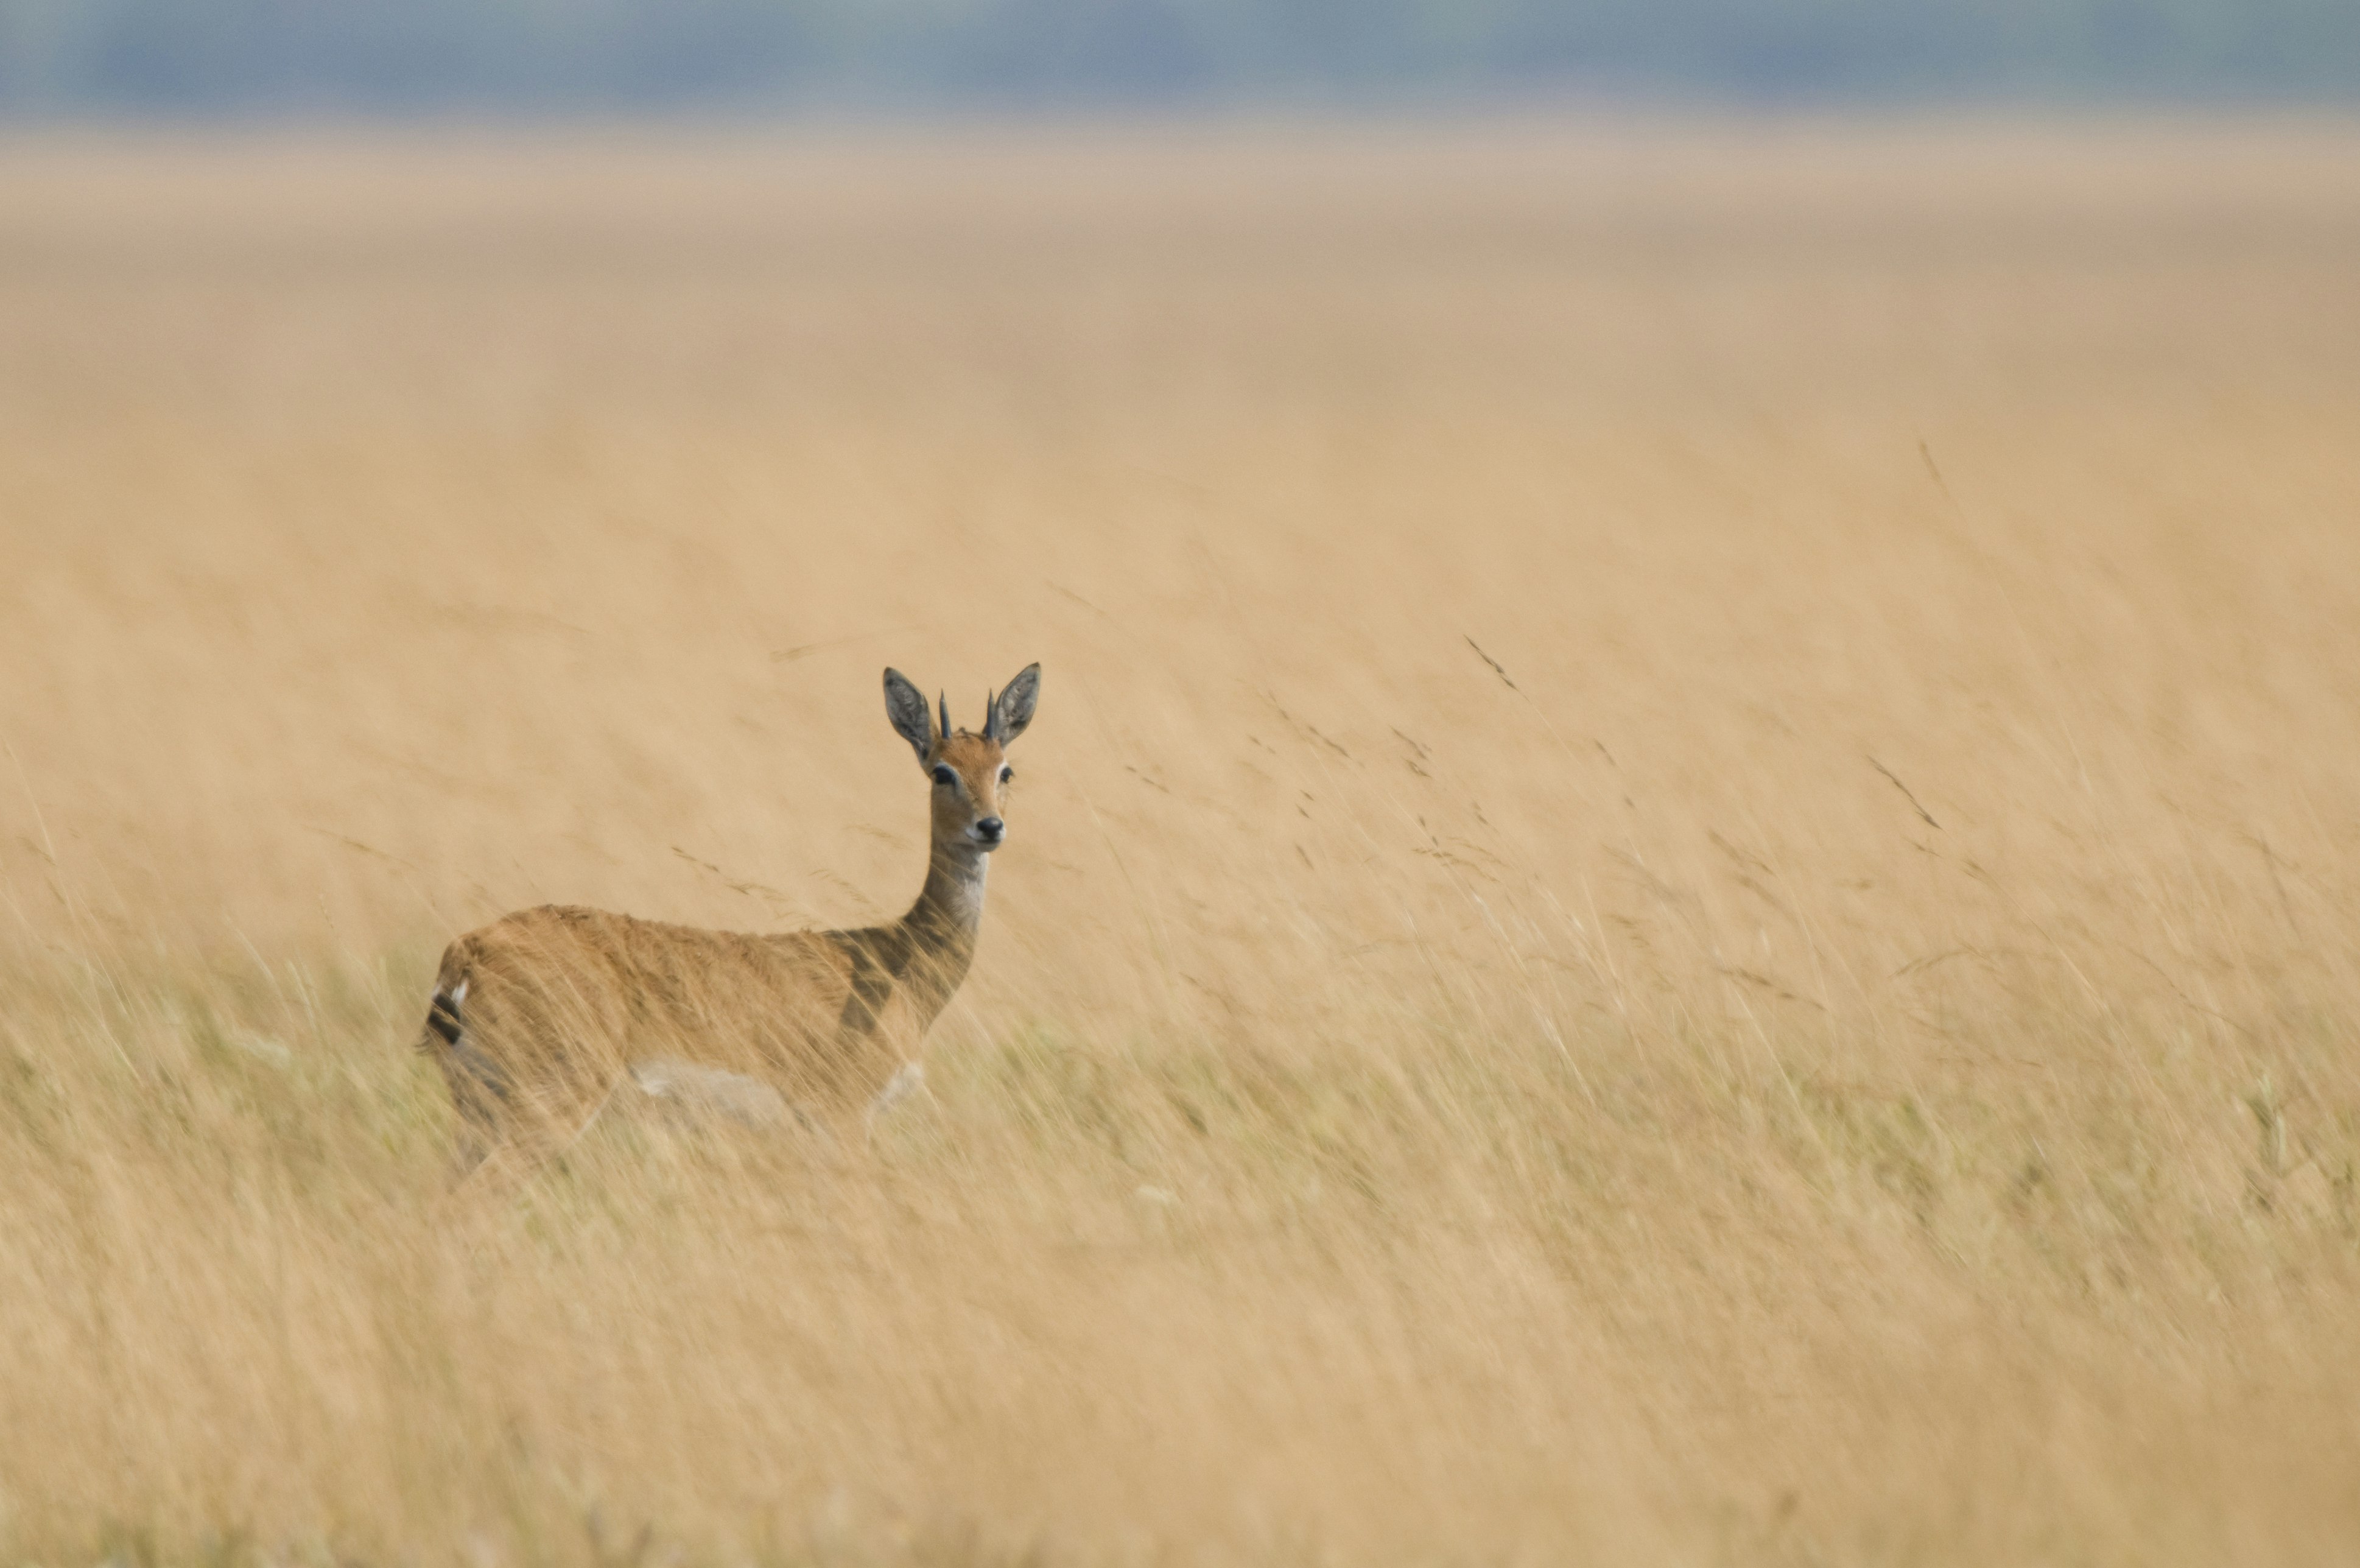 Oribi (Ourebia ourebi) in grassland, Liuwa Plain National Park, Zambia